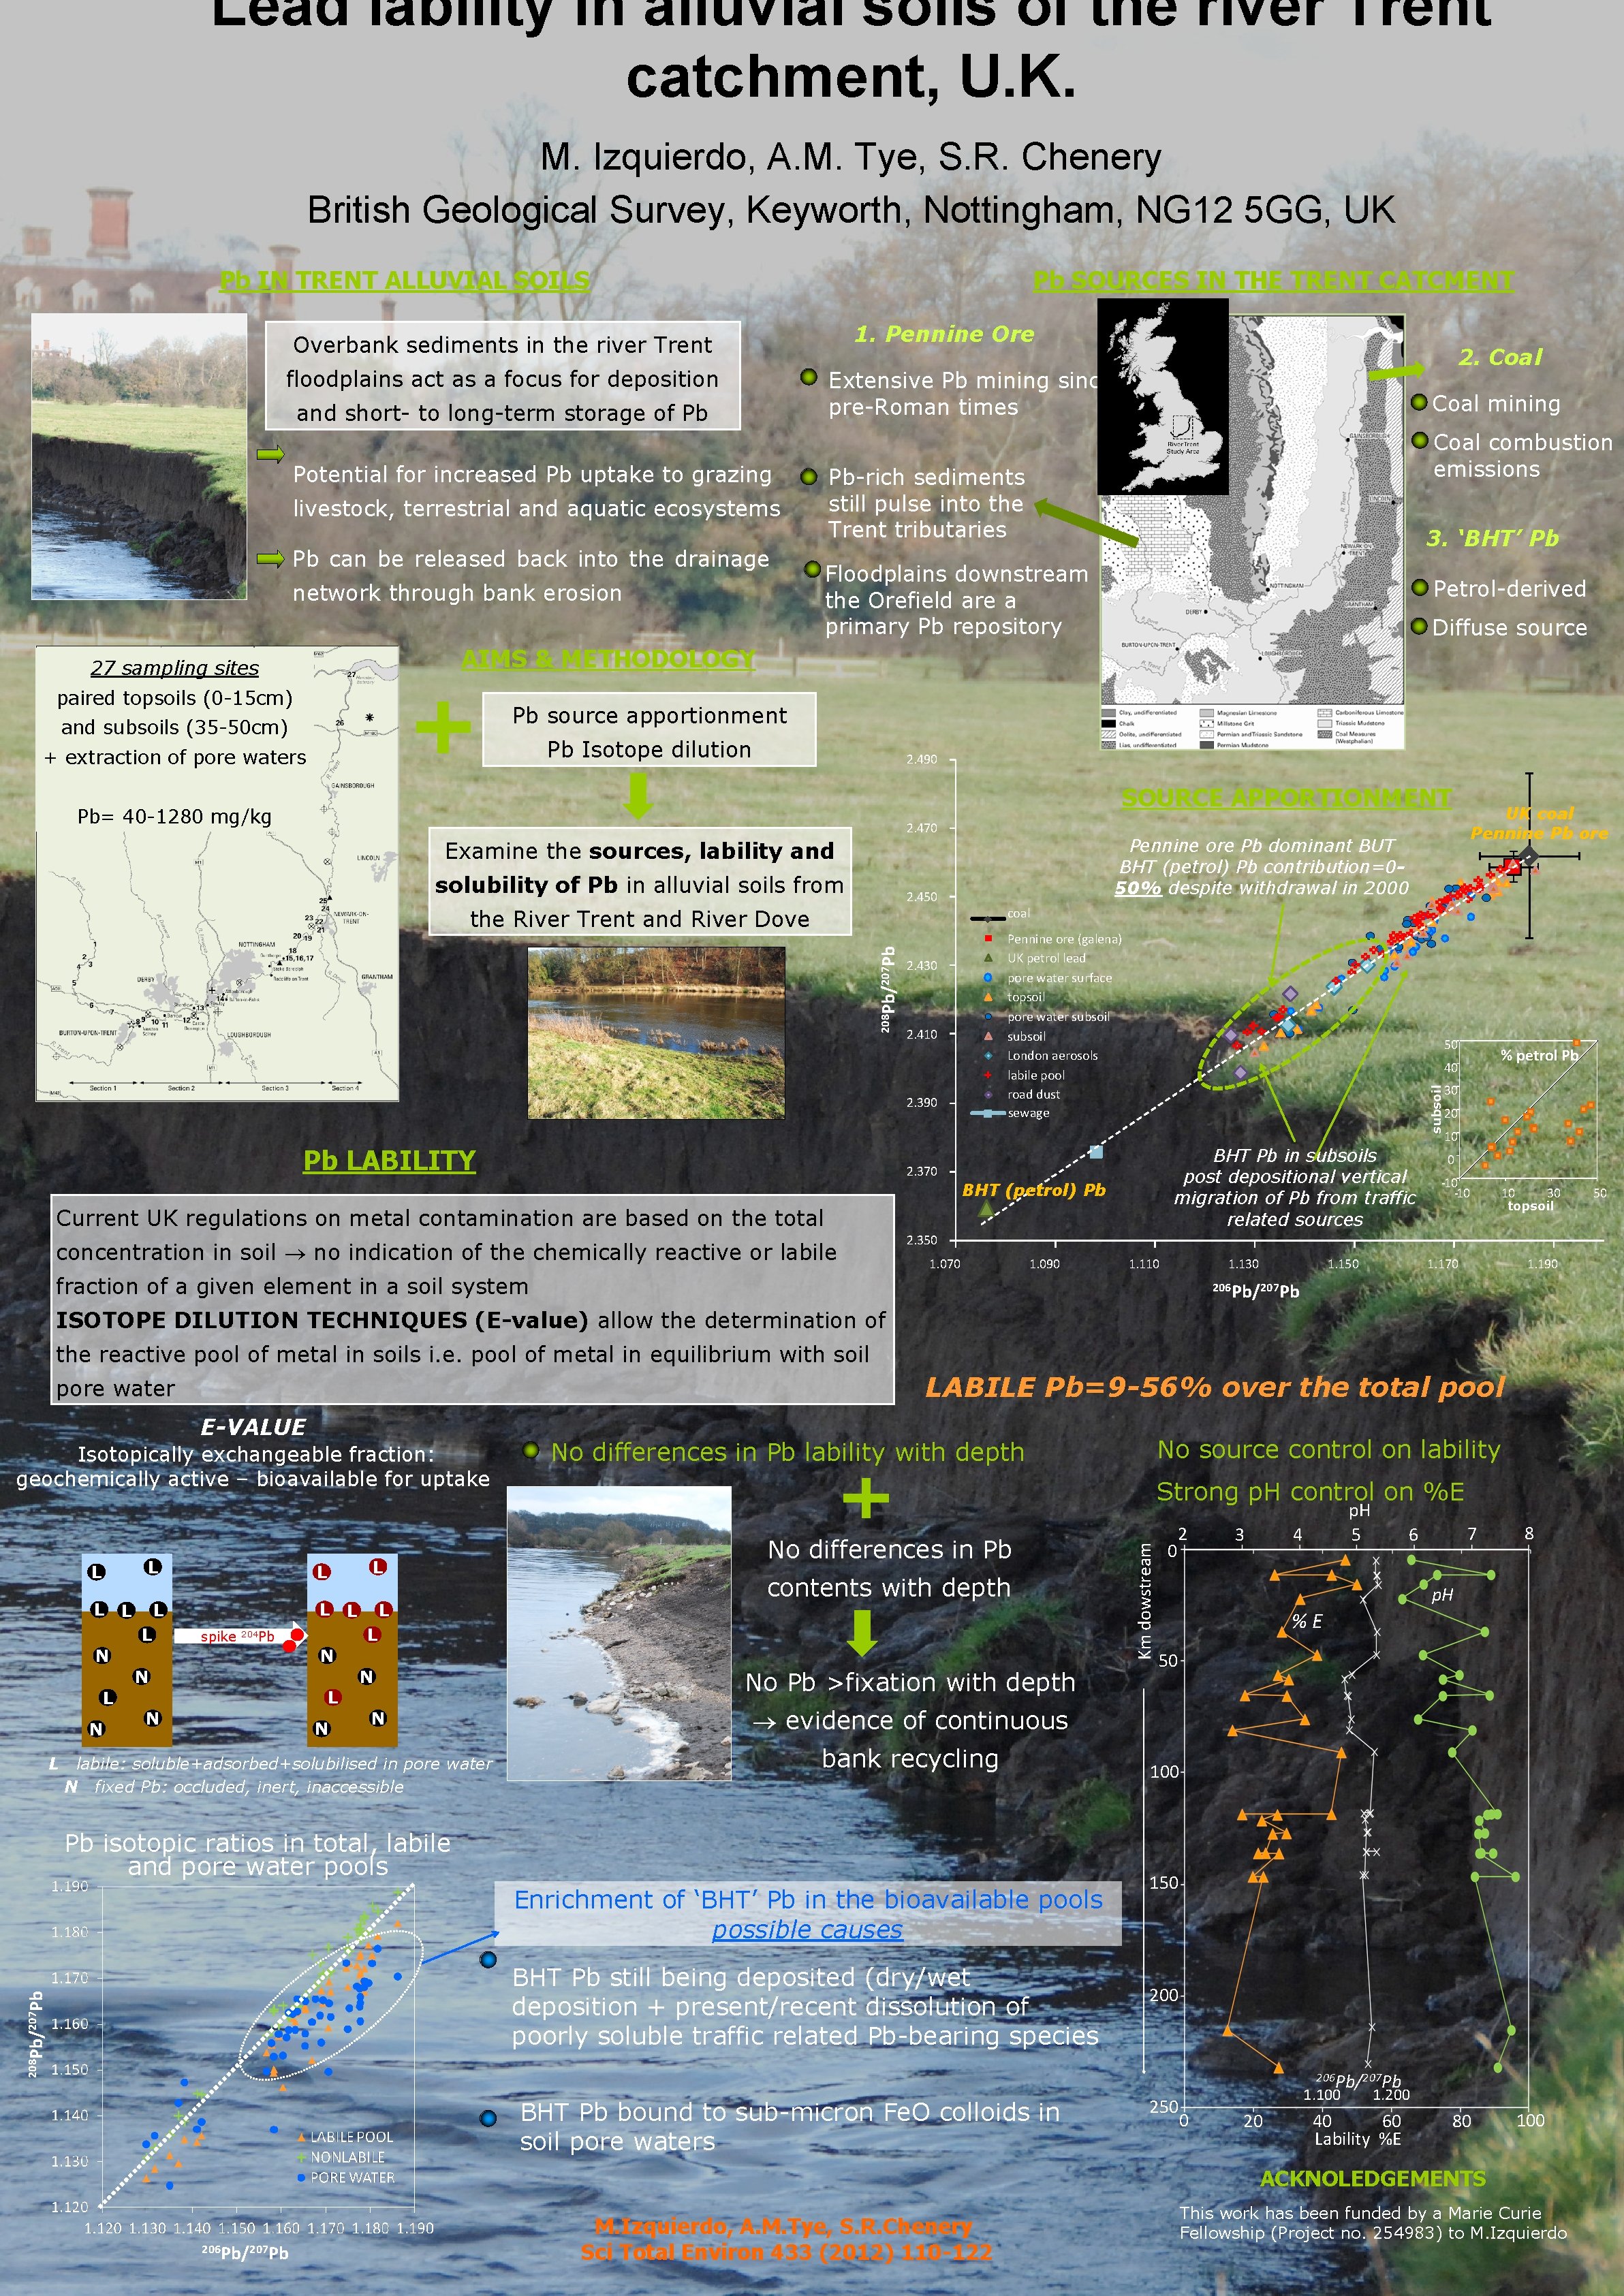 Lead lability in alluvial soils of the river Trent catchment, U. K. M. Izquierdo,